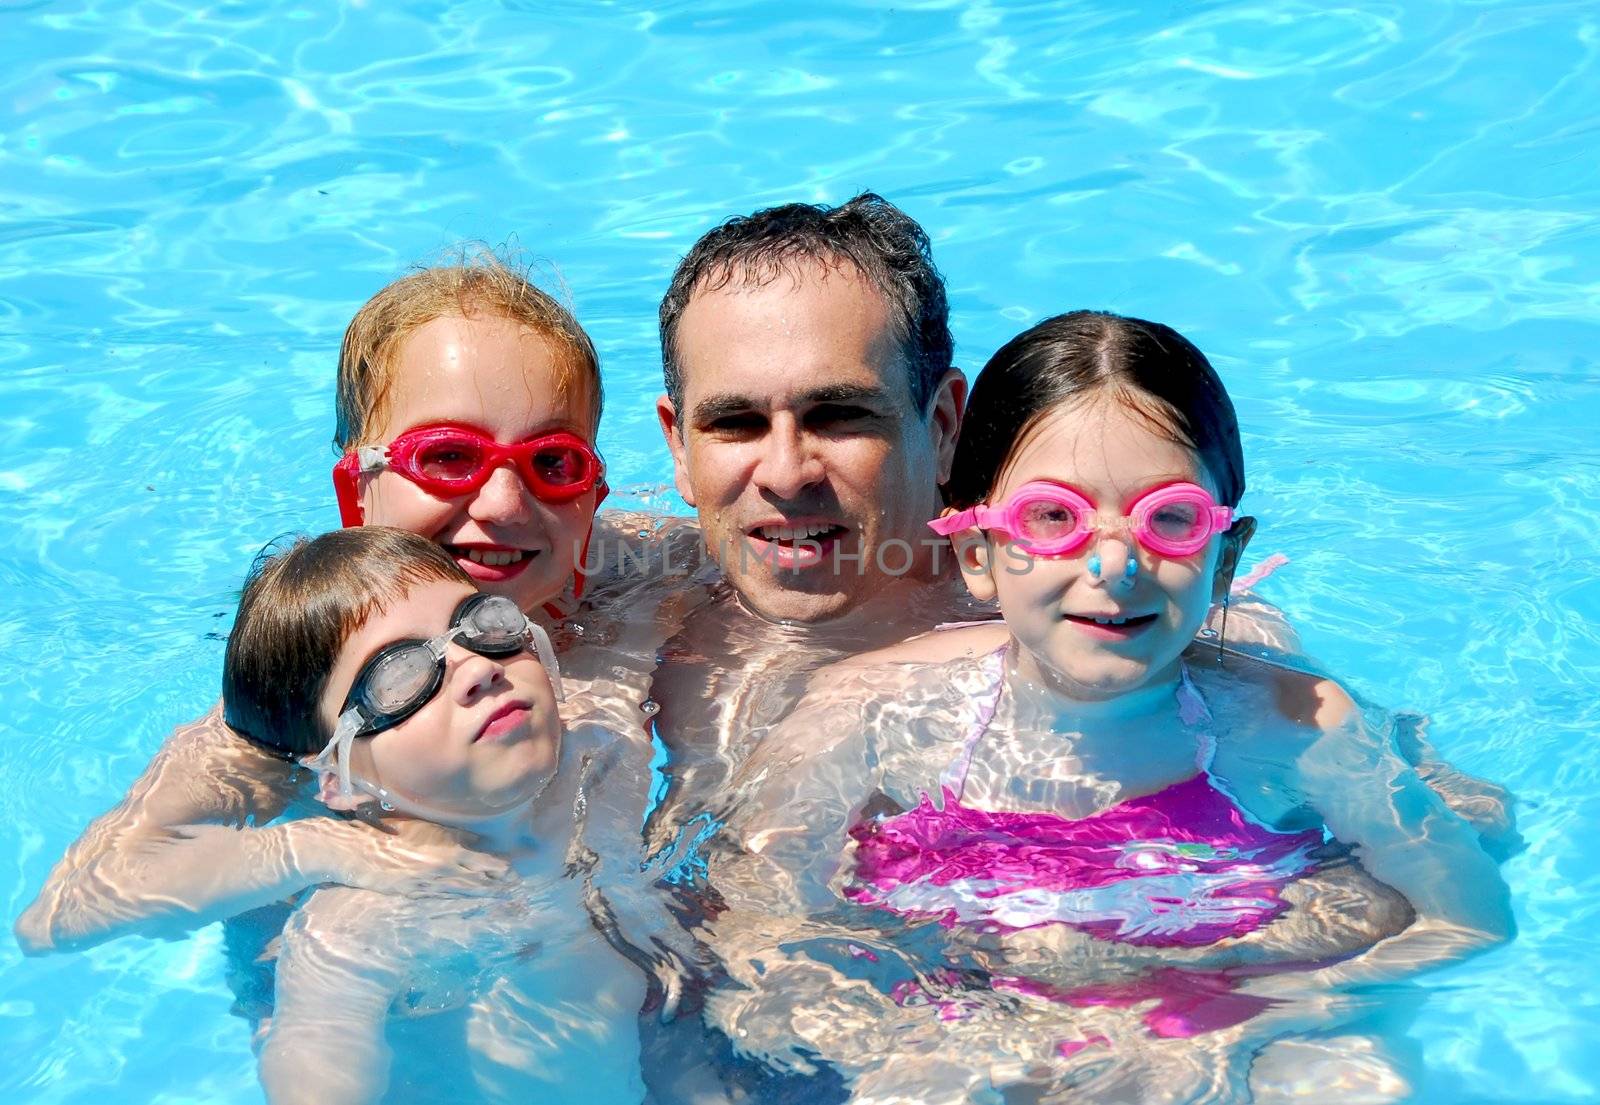 Family fun pool by elenathewise